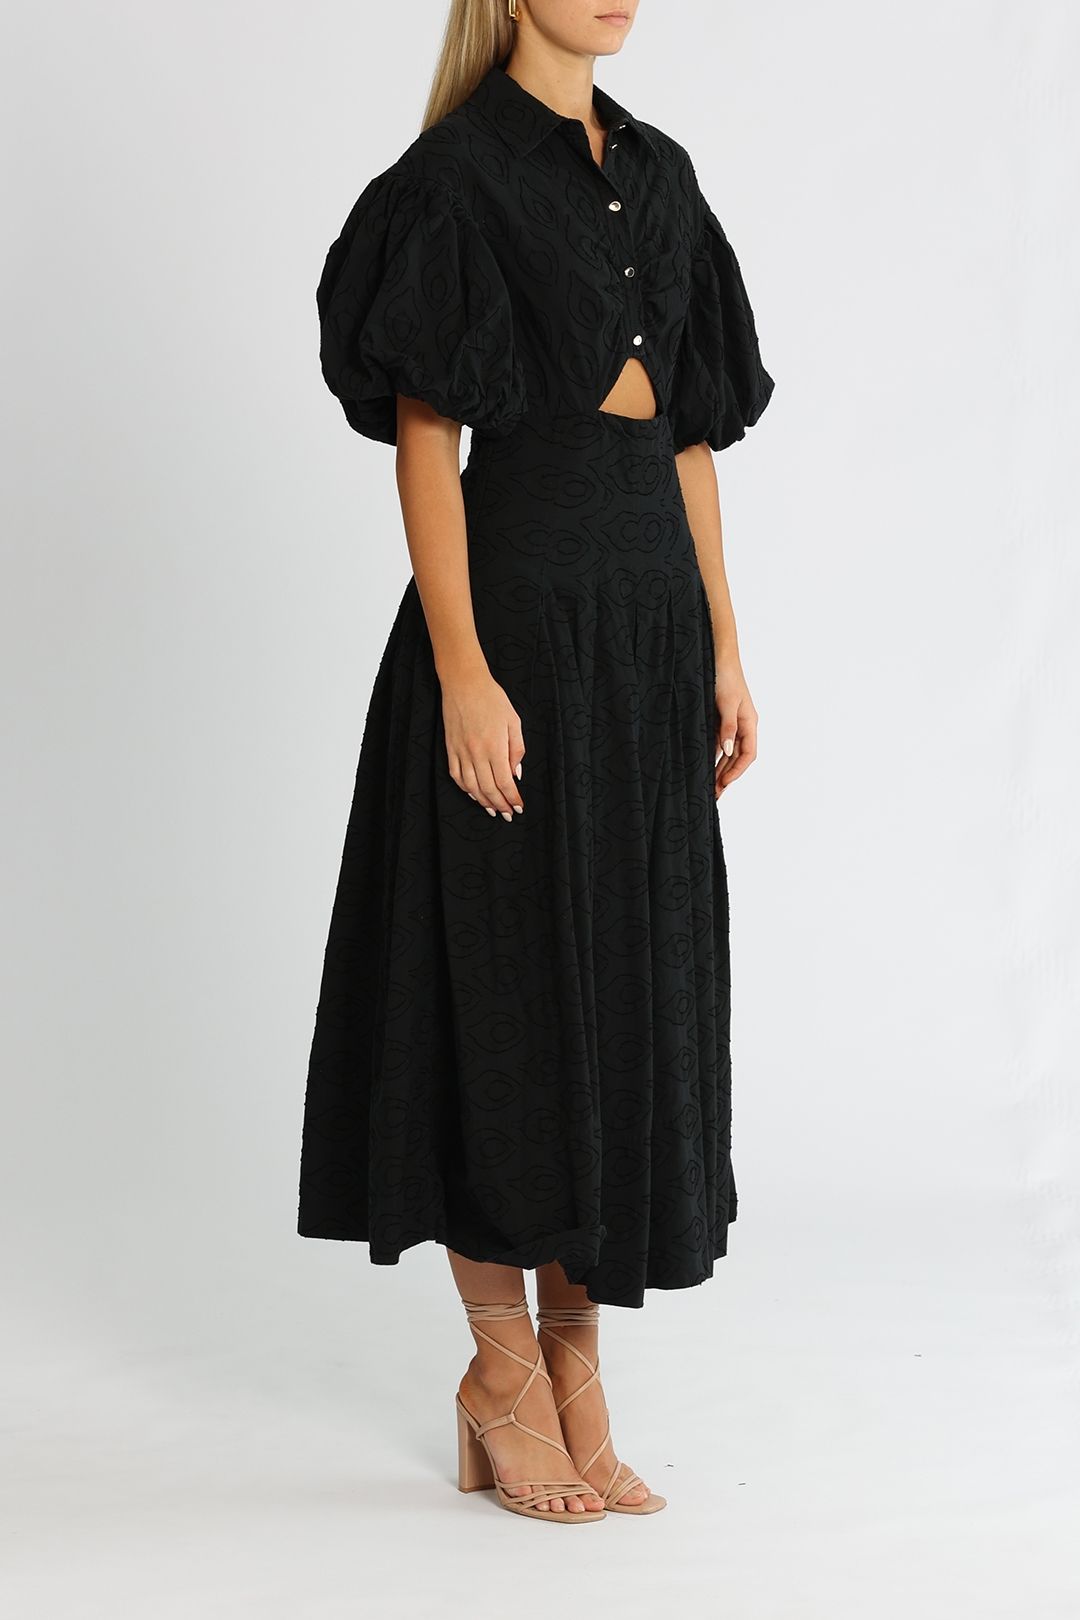 Acler Grange Dress Black Cutout